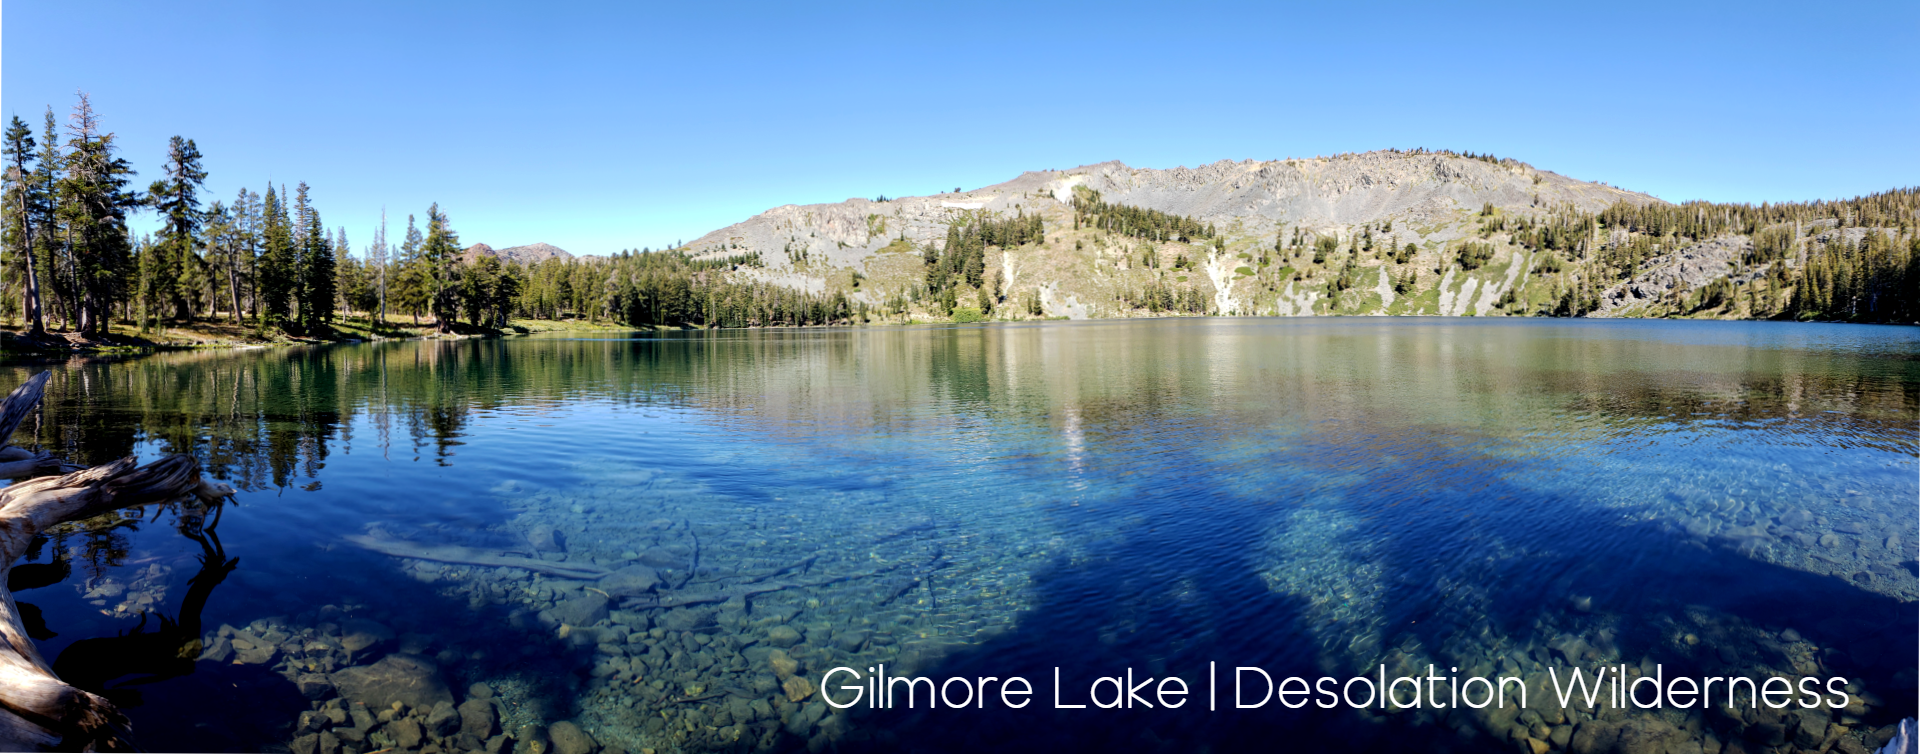 Gilmore Lake desolation